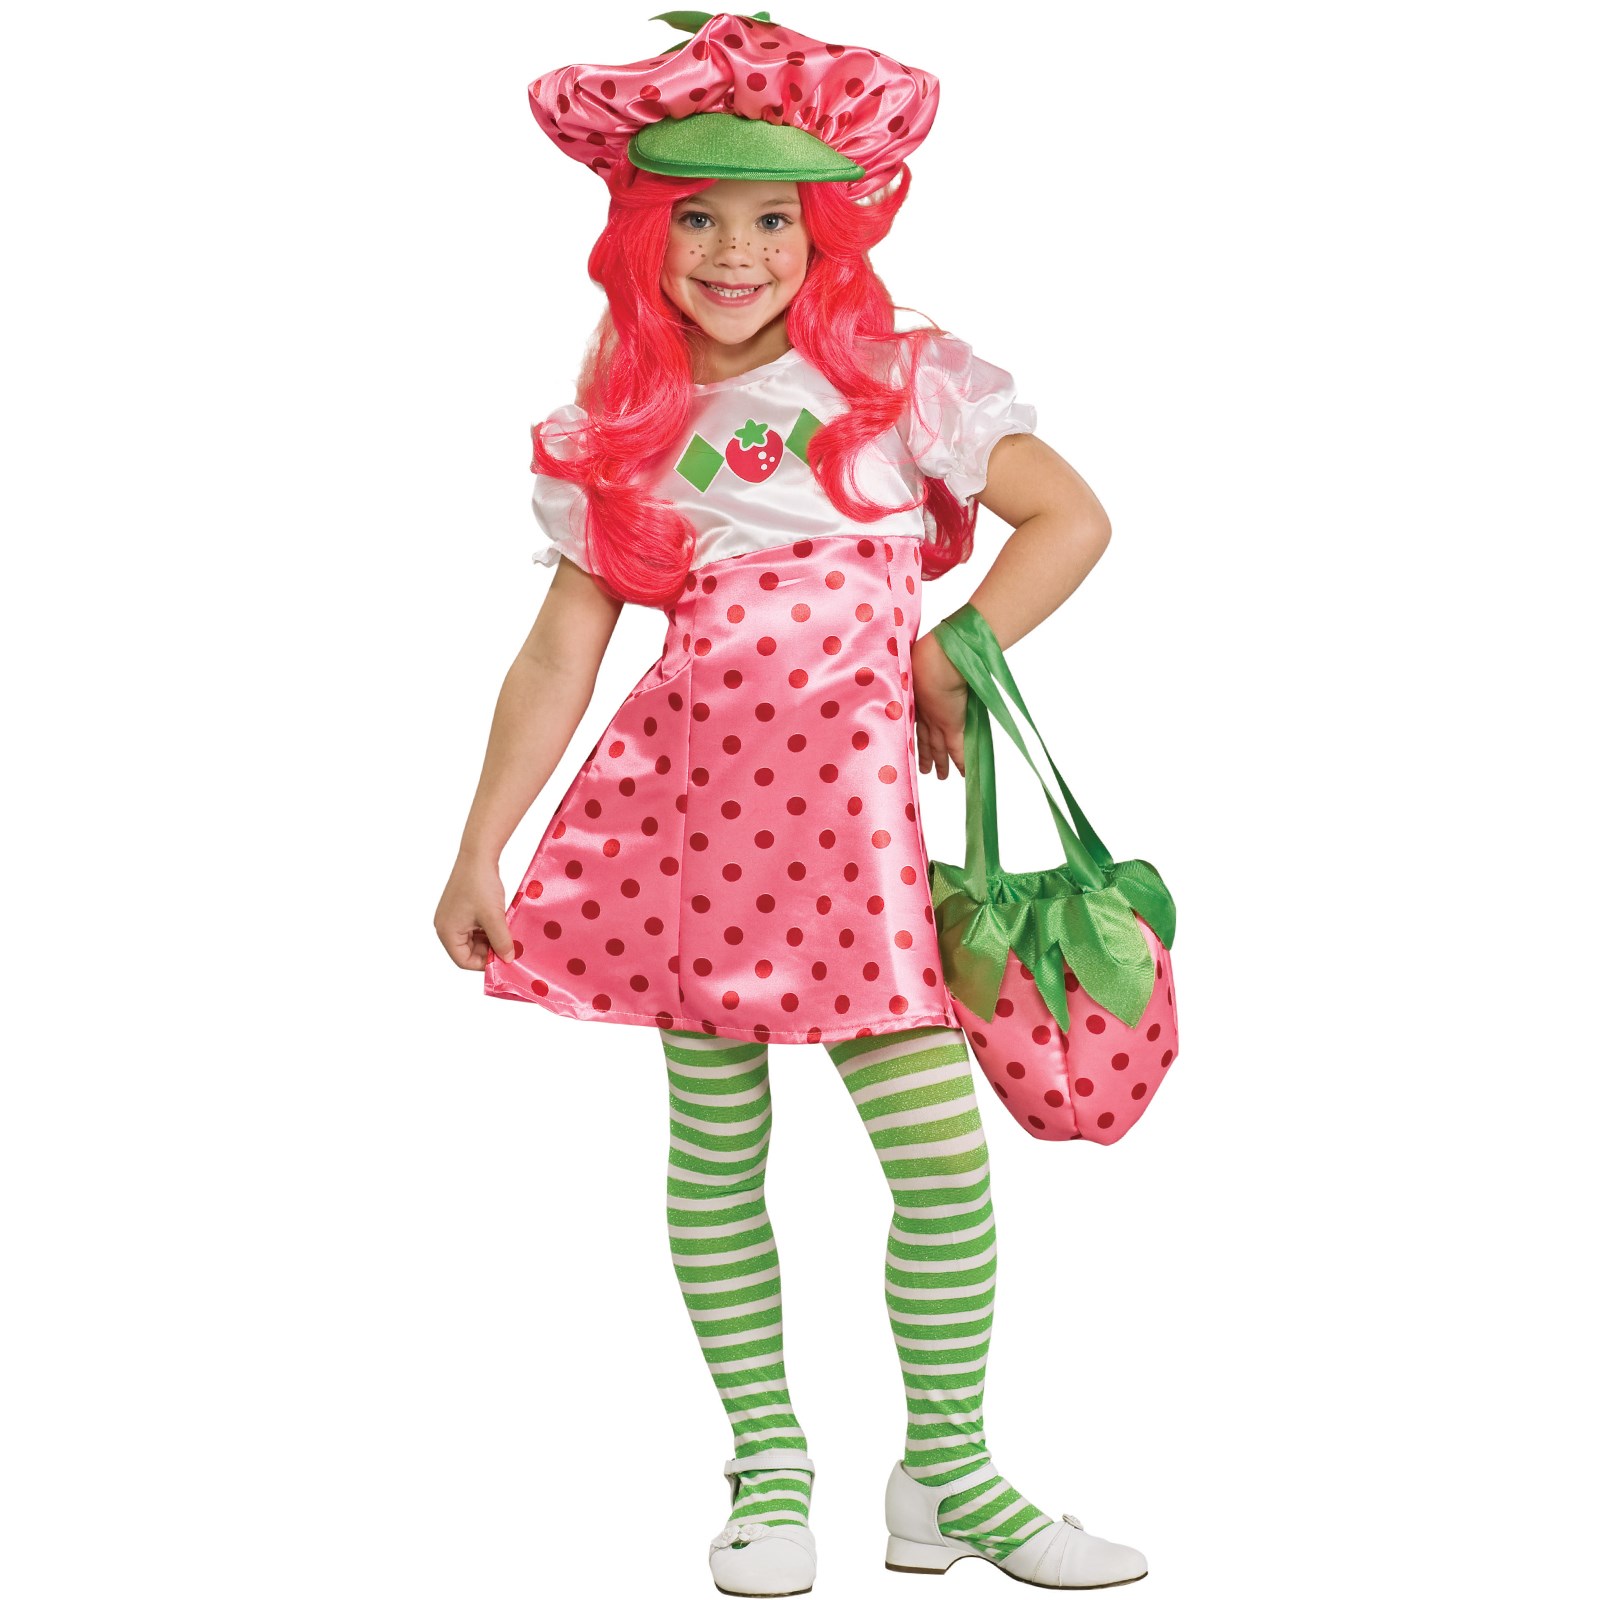 Strawberry Shortcake Deluxe Toddler / Child Costume